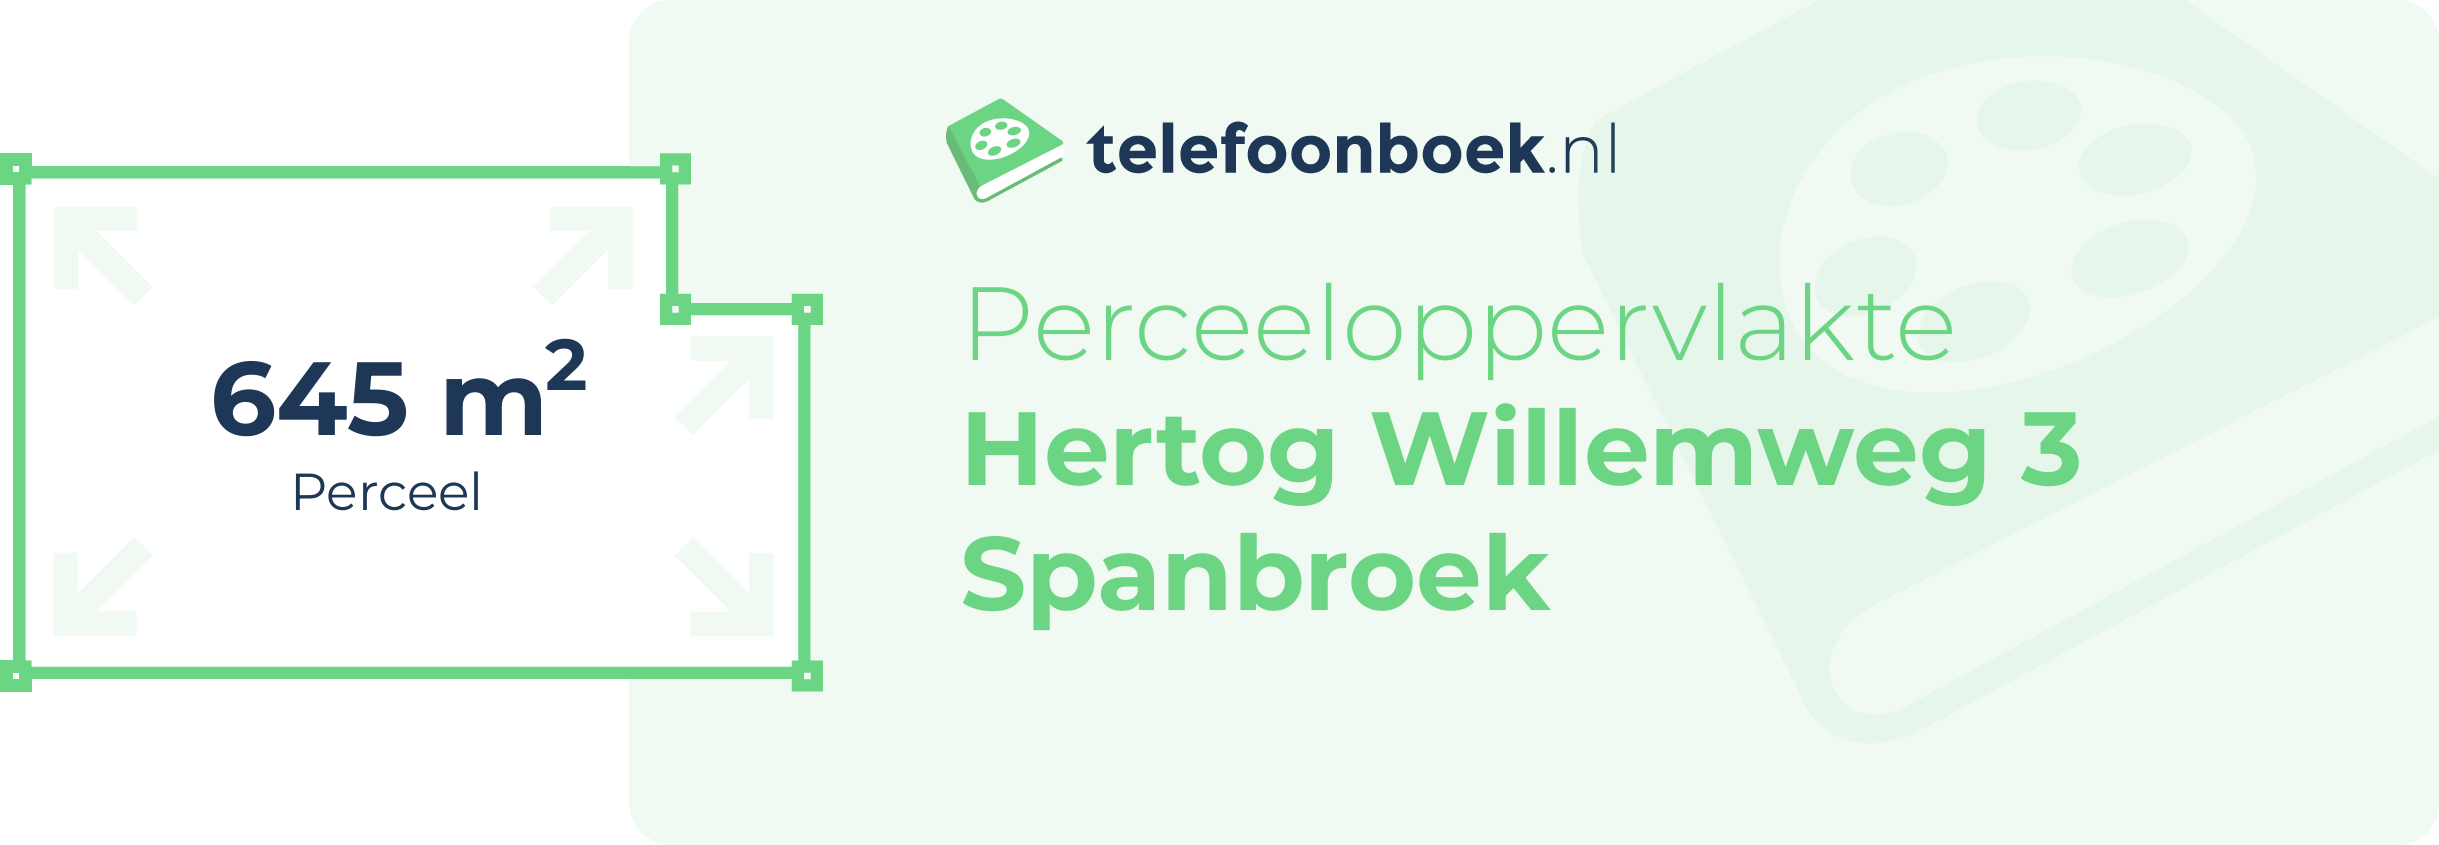 Perceeloppervlakte Hertog Willemweg 3 Spanbroek